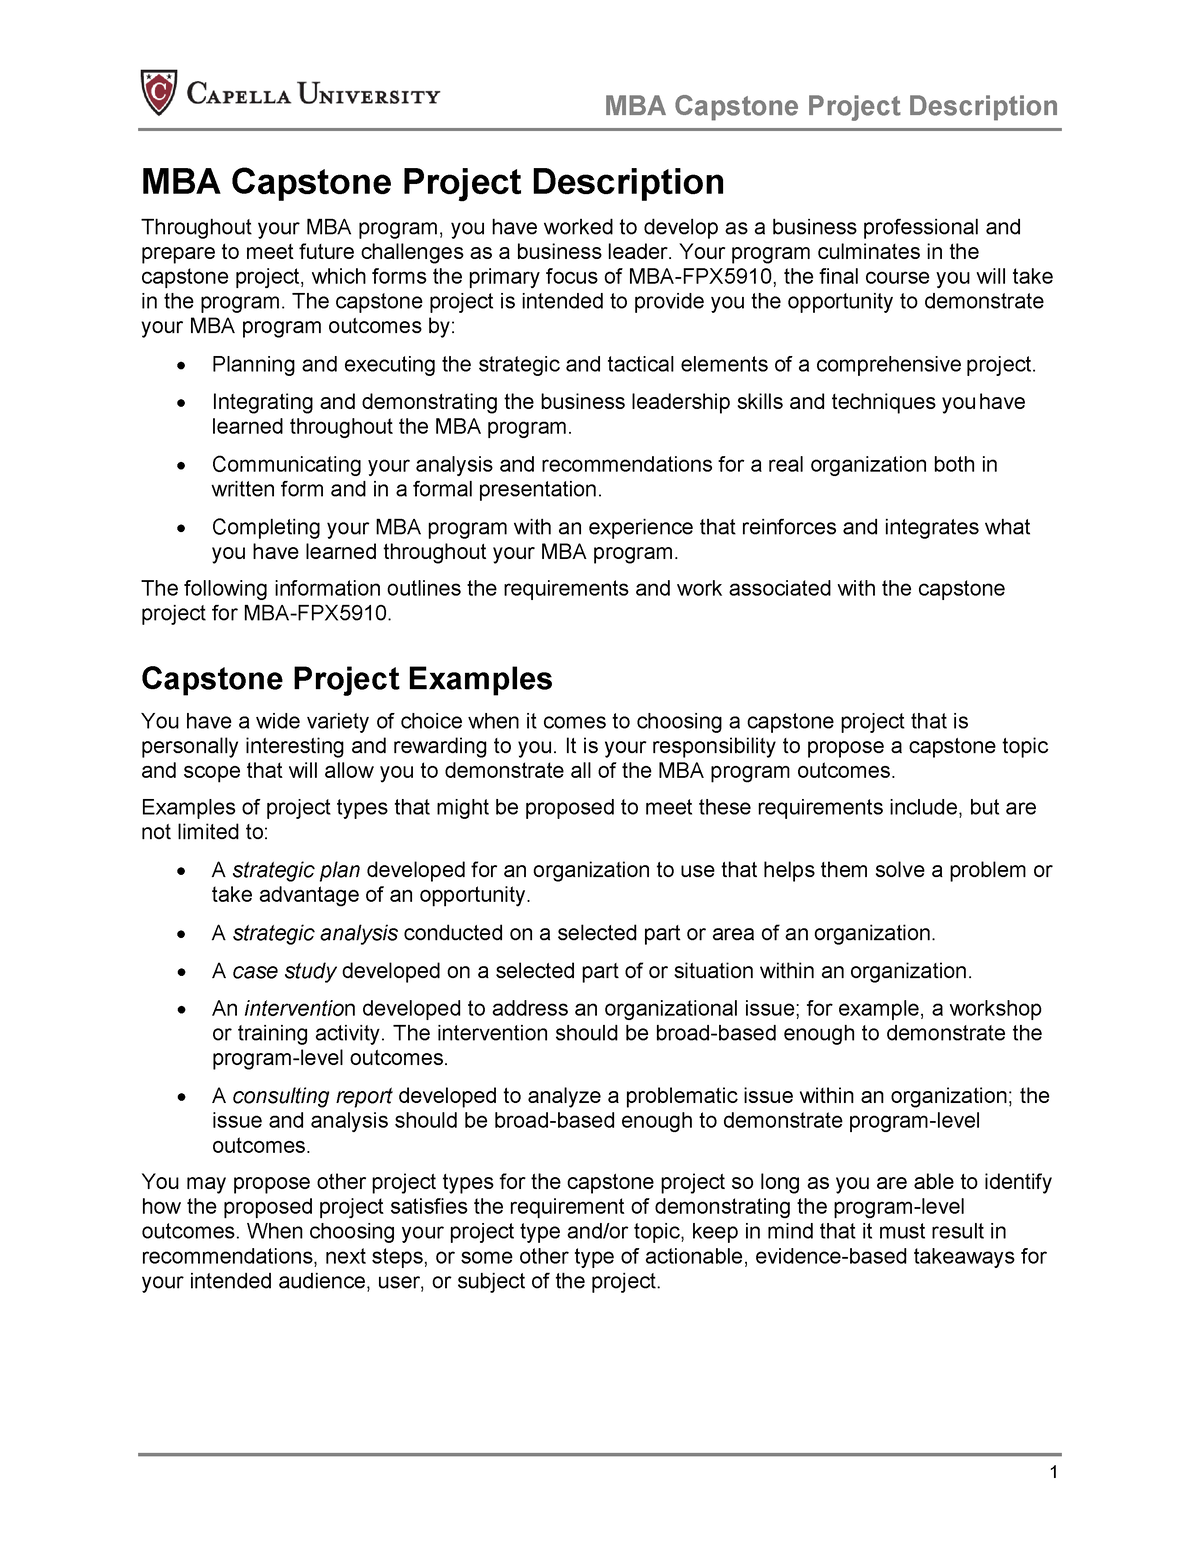 capstone project reports